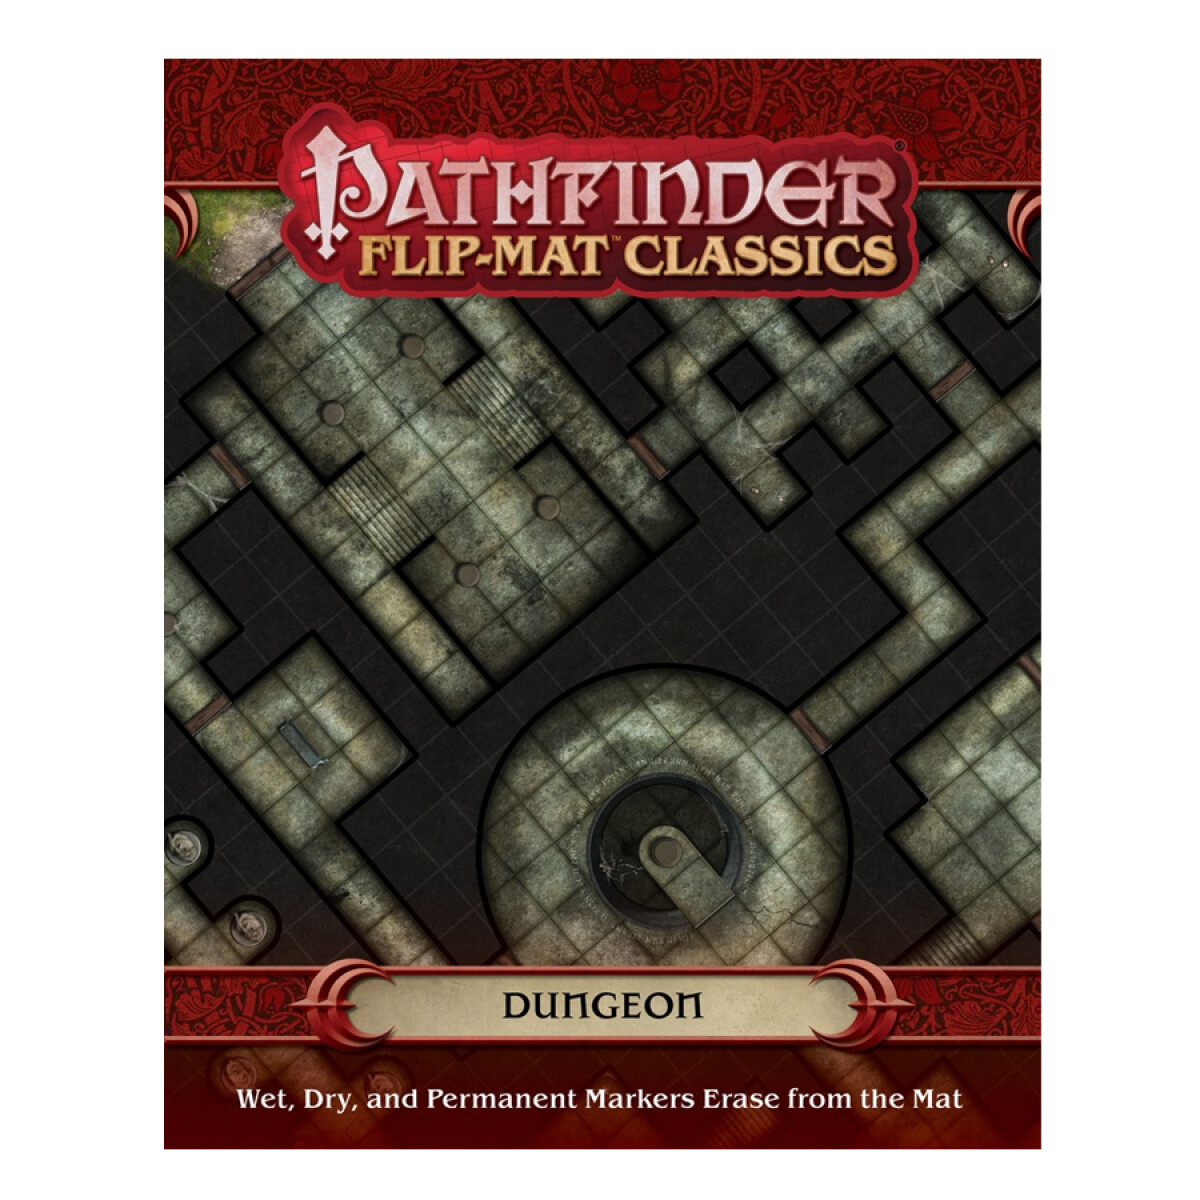 Pathfinder Flip-Mat Map - Dungeon (Inglés) 